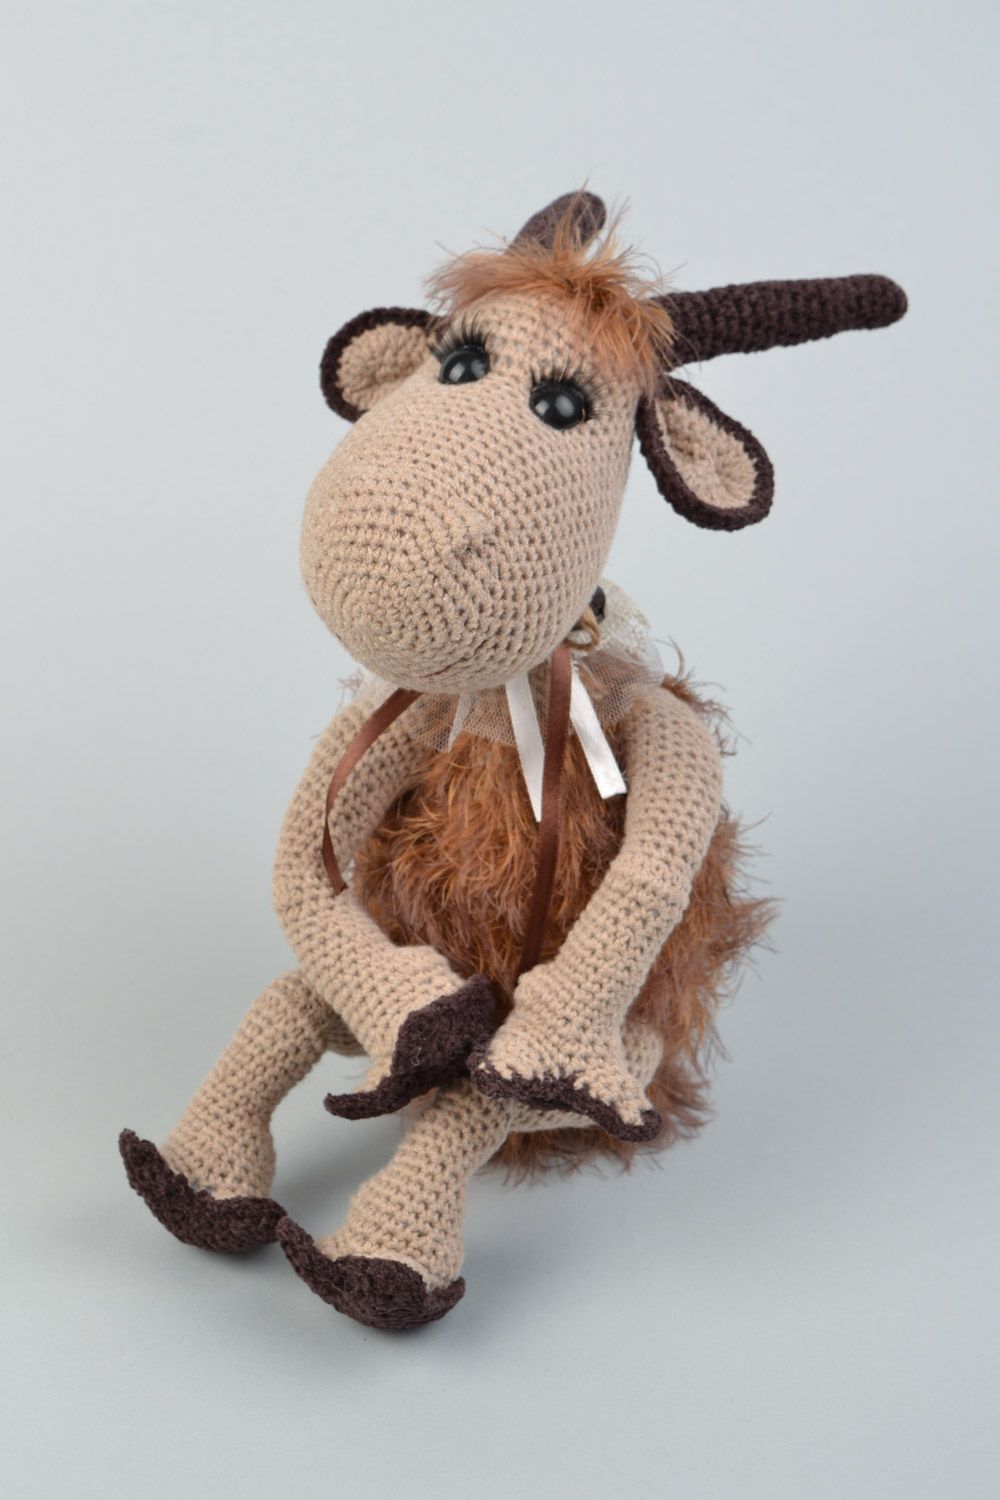 Handmade soft crochet toy nanny goat for children and home decor photo 1